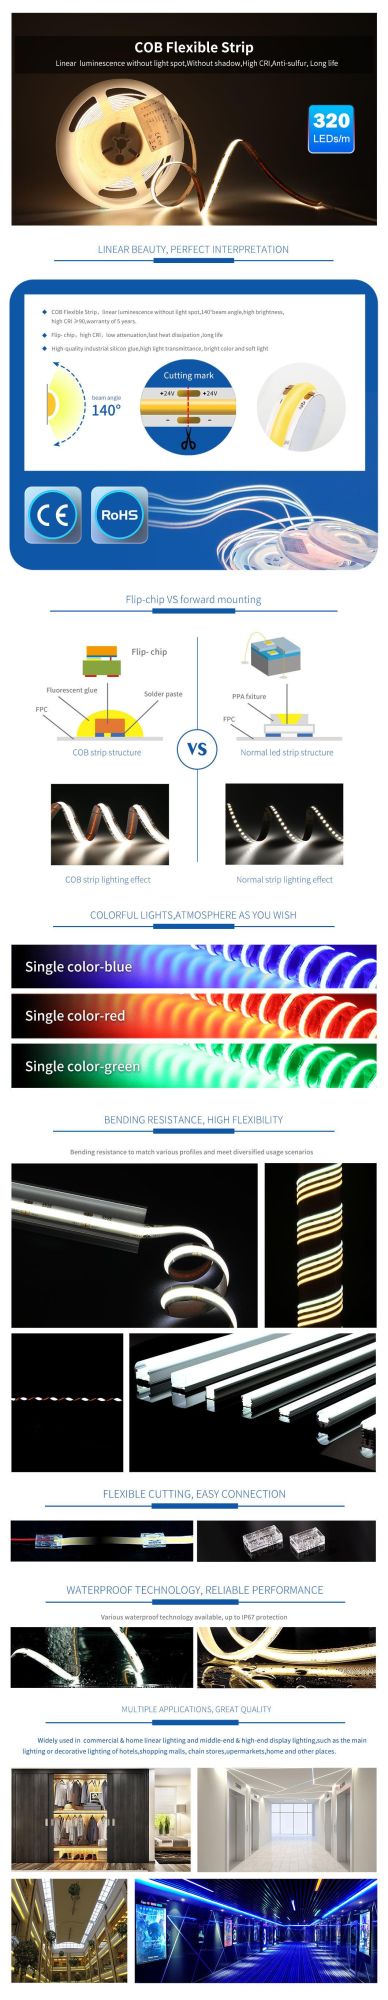 DOT Free High Density 320LEDs/M Flexible COB LED Strip Light Flexible Strip LED Tape Light